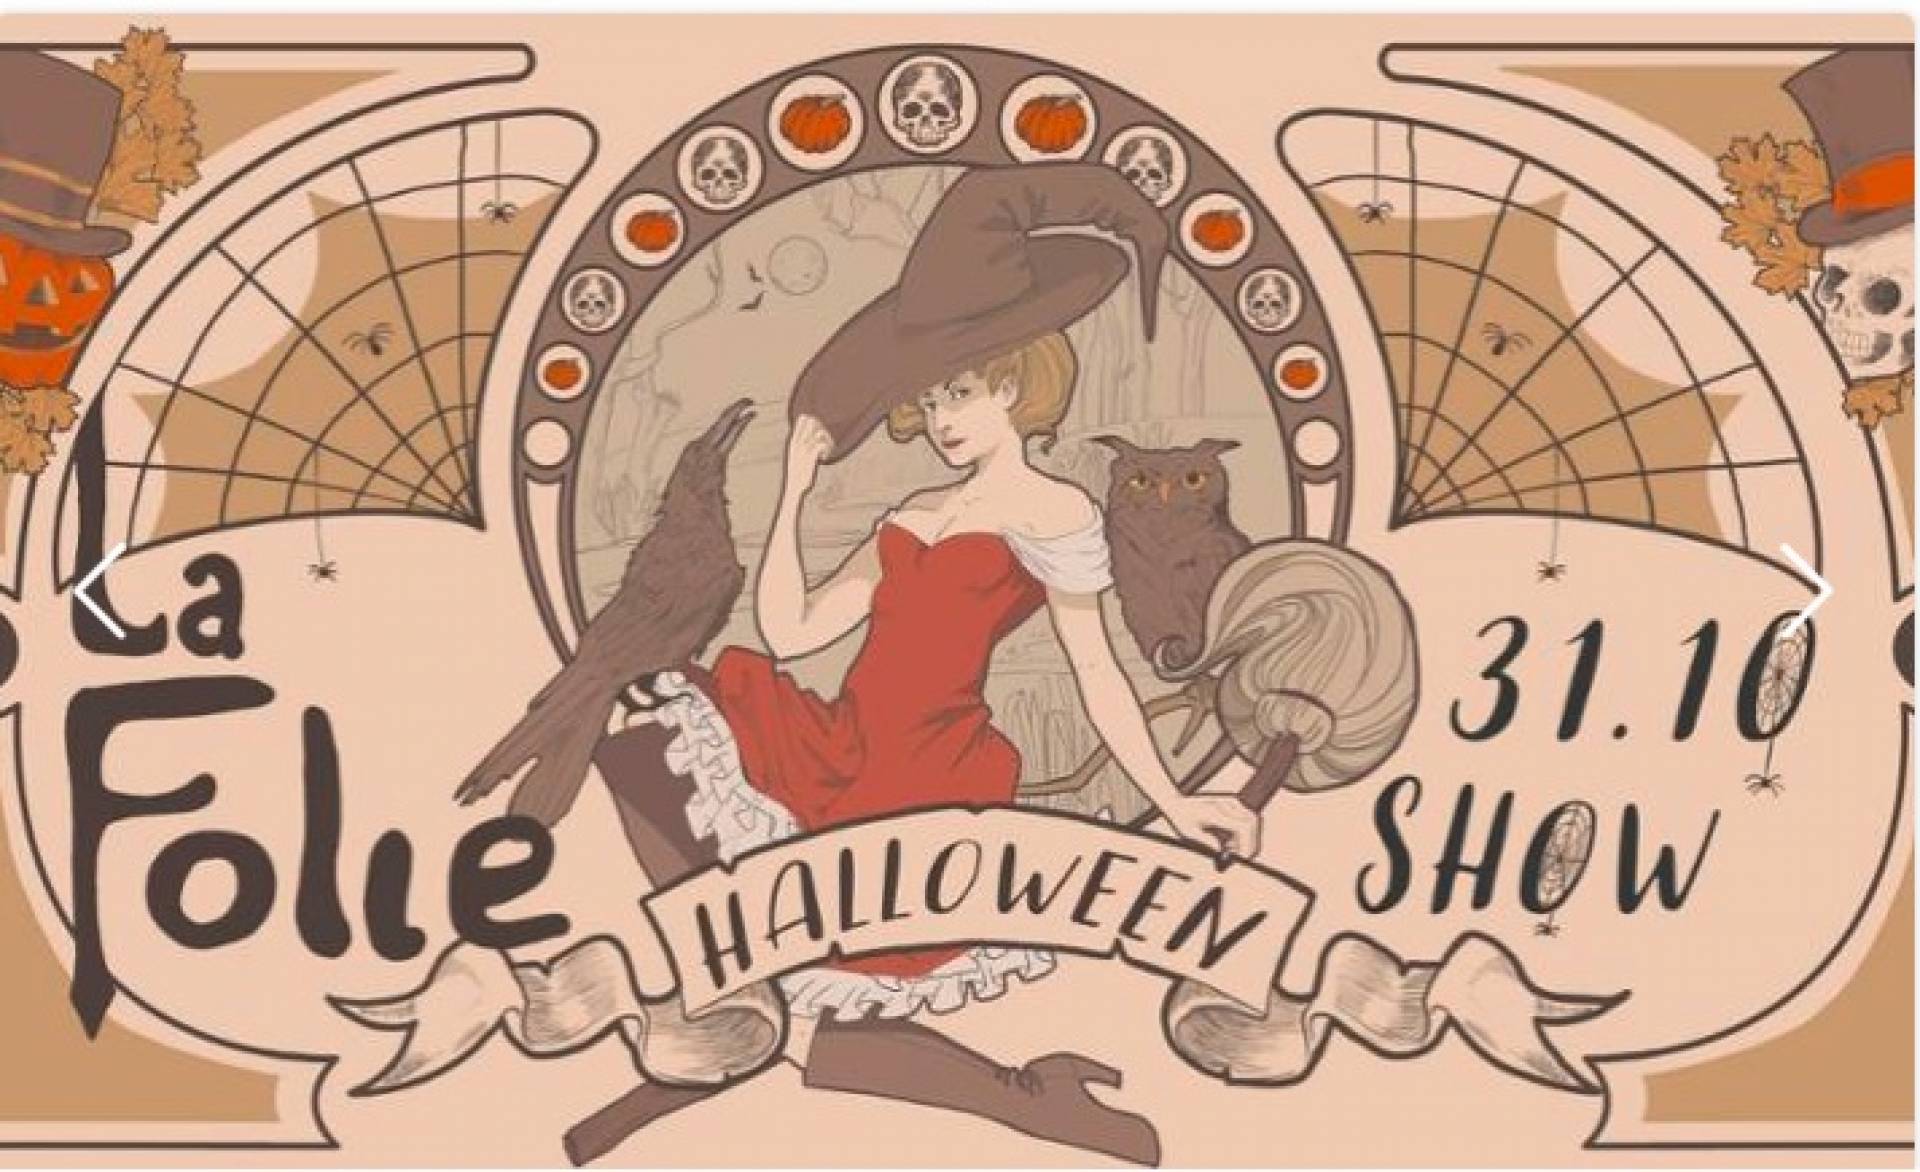 La Folie! Halloween show